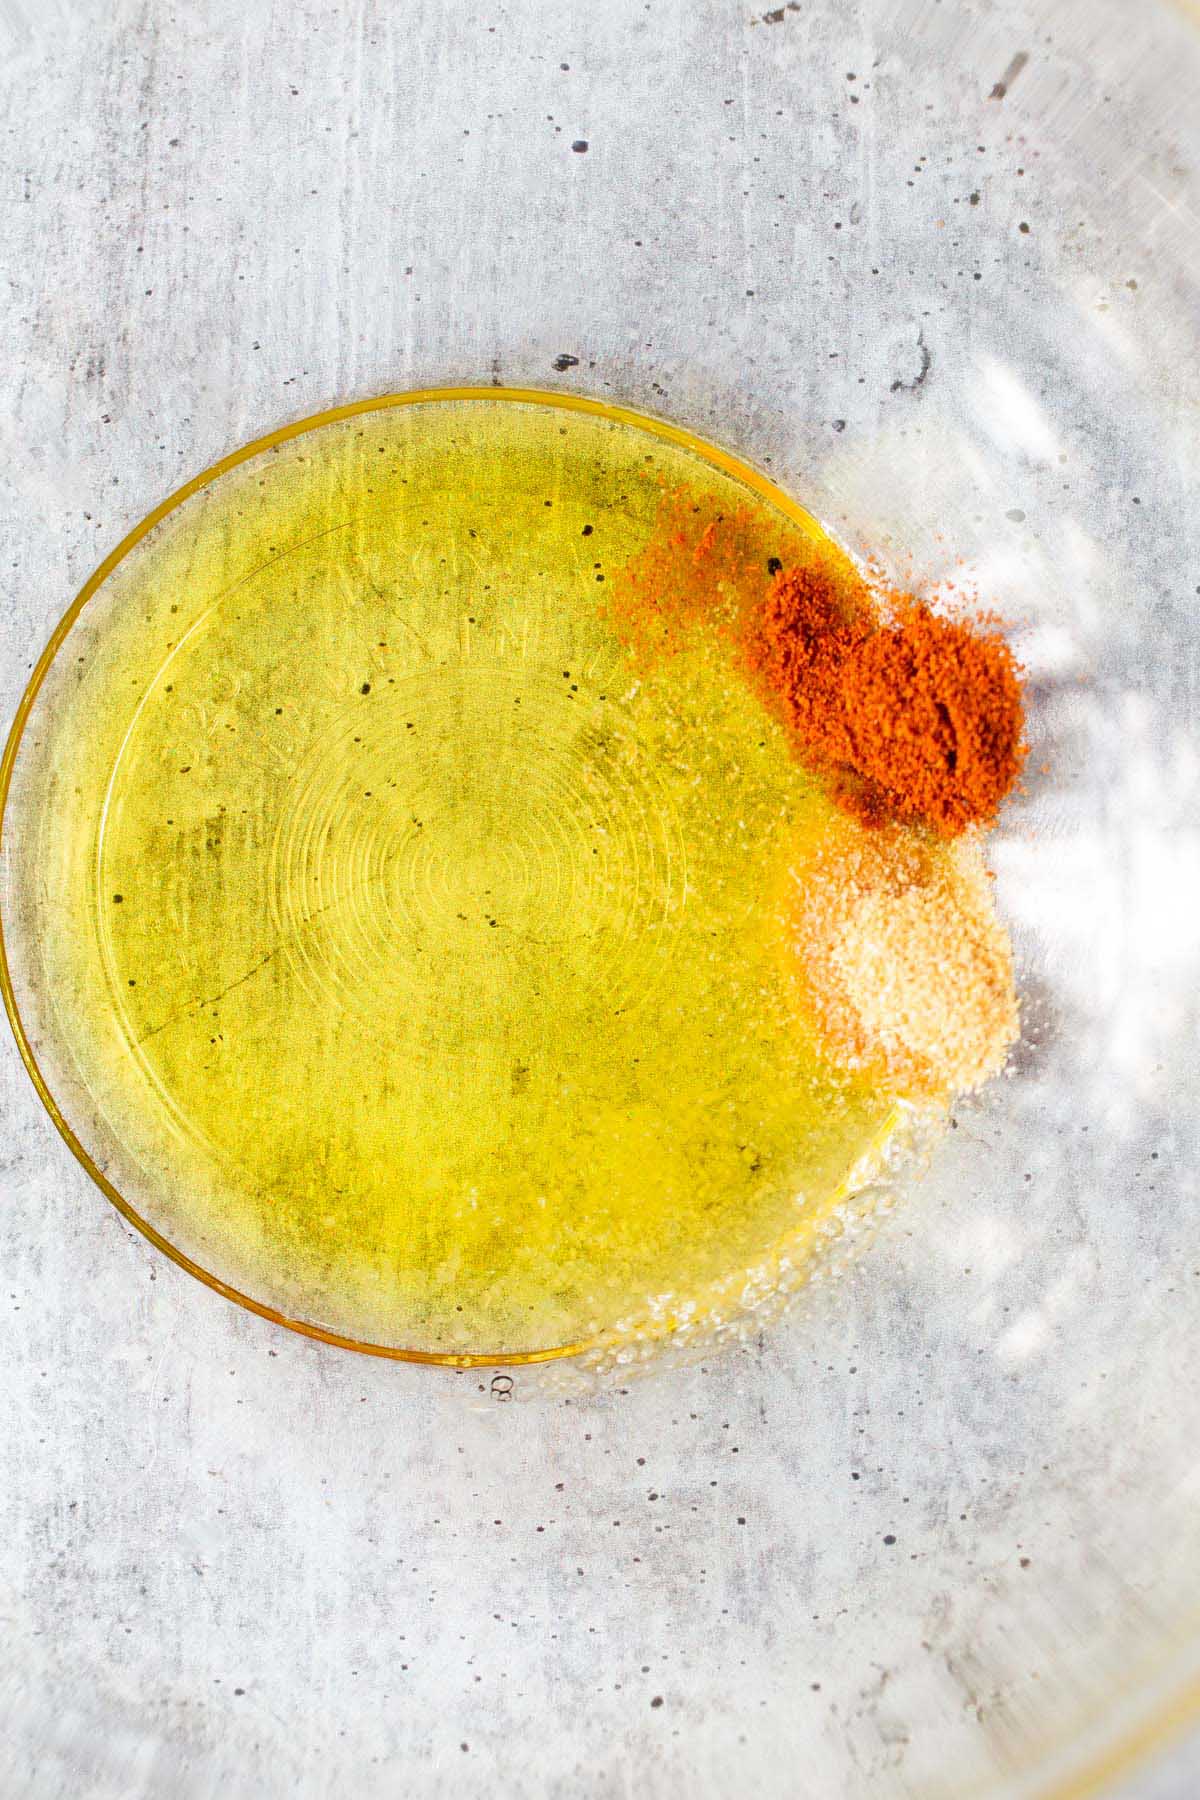 Olive oil, salt, garlic powder, and paprika in a bowl.